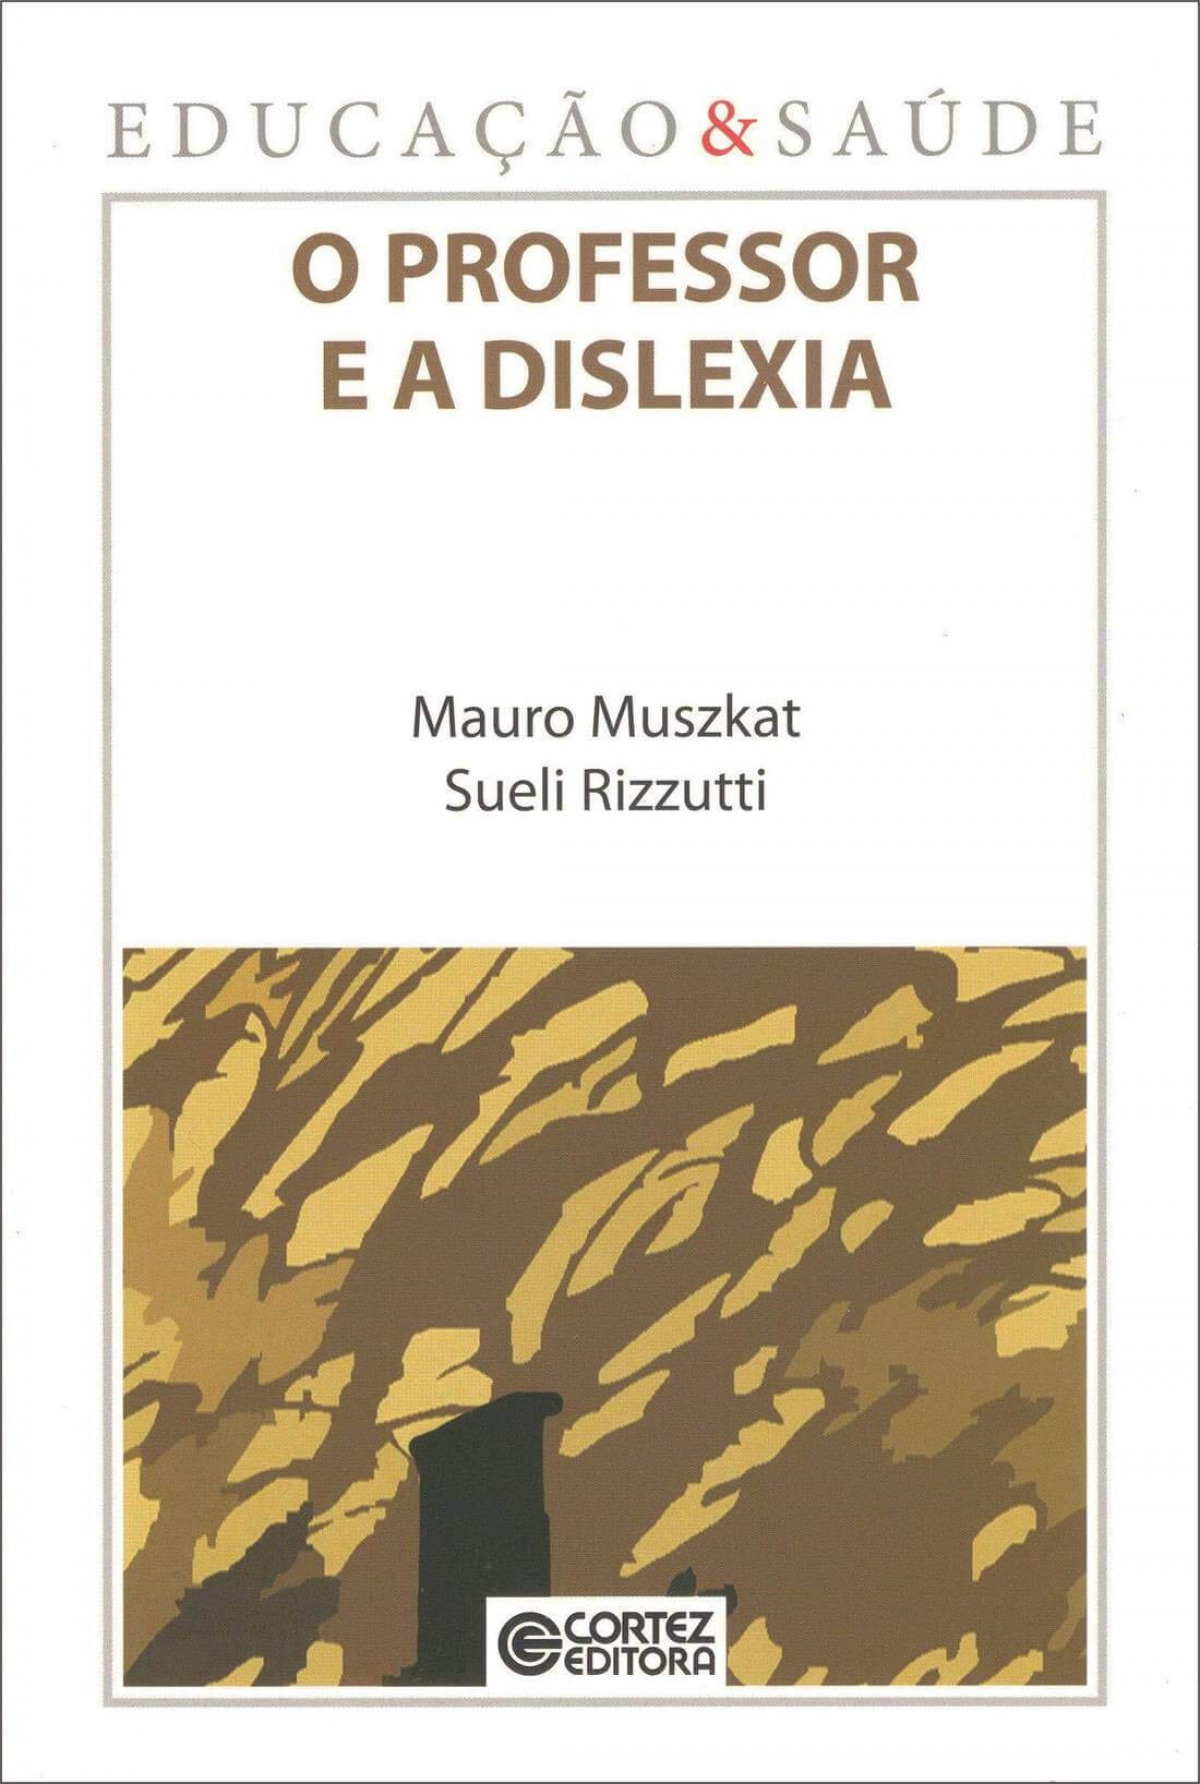 O professor e a dislexia - Mauro Muszkat